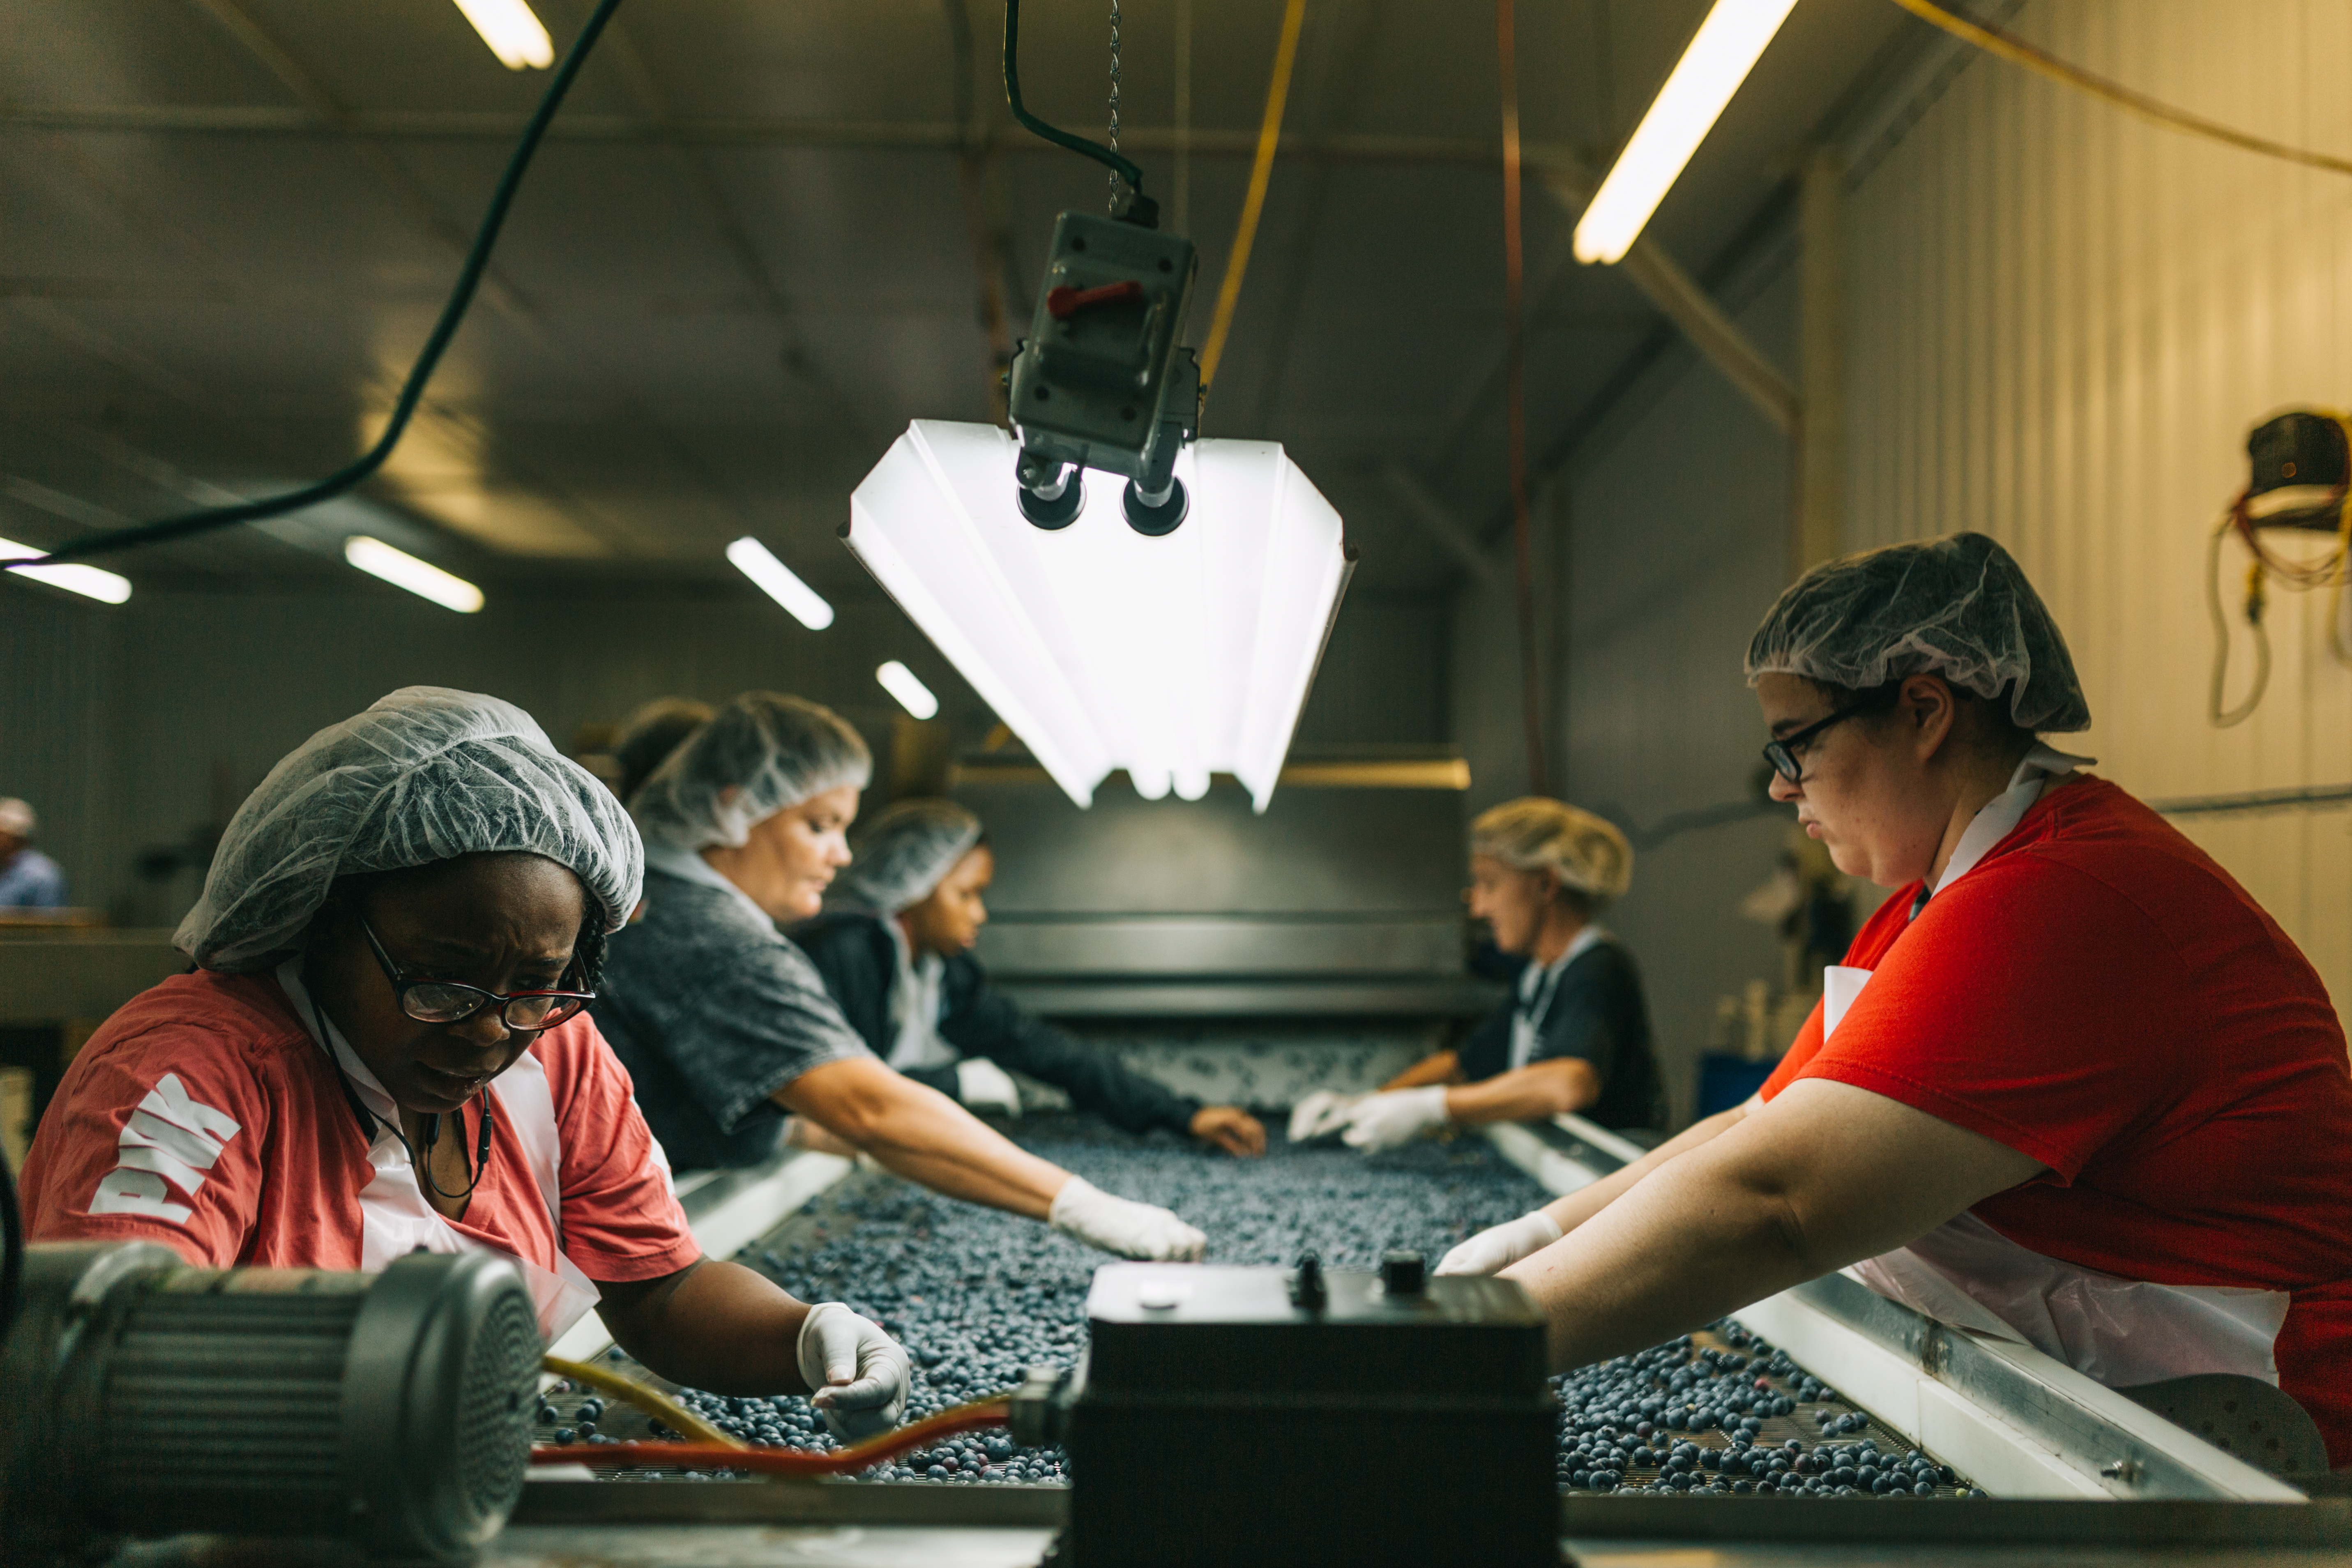 Employees of Rabbiteye winery sorting blueberries.